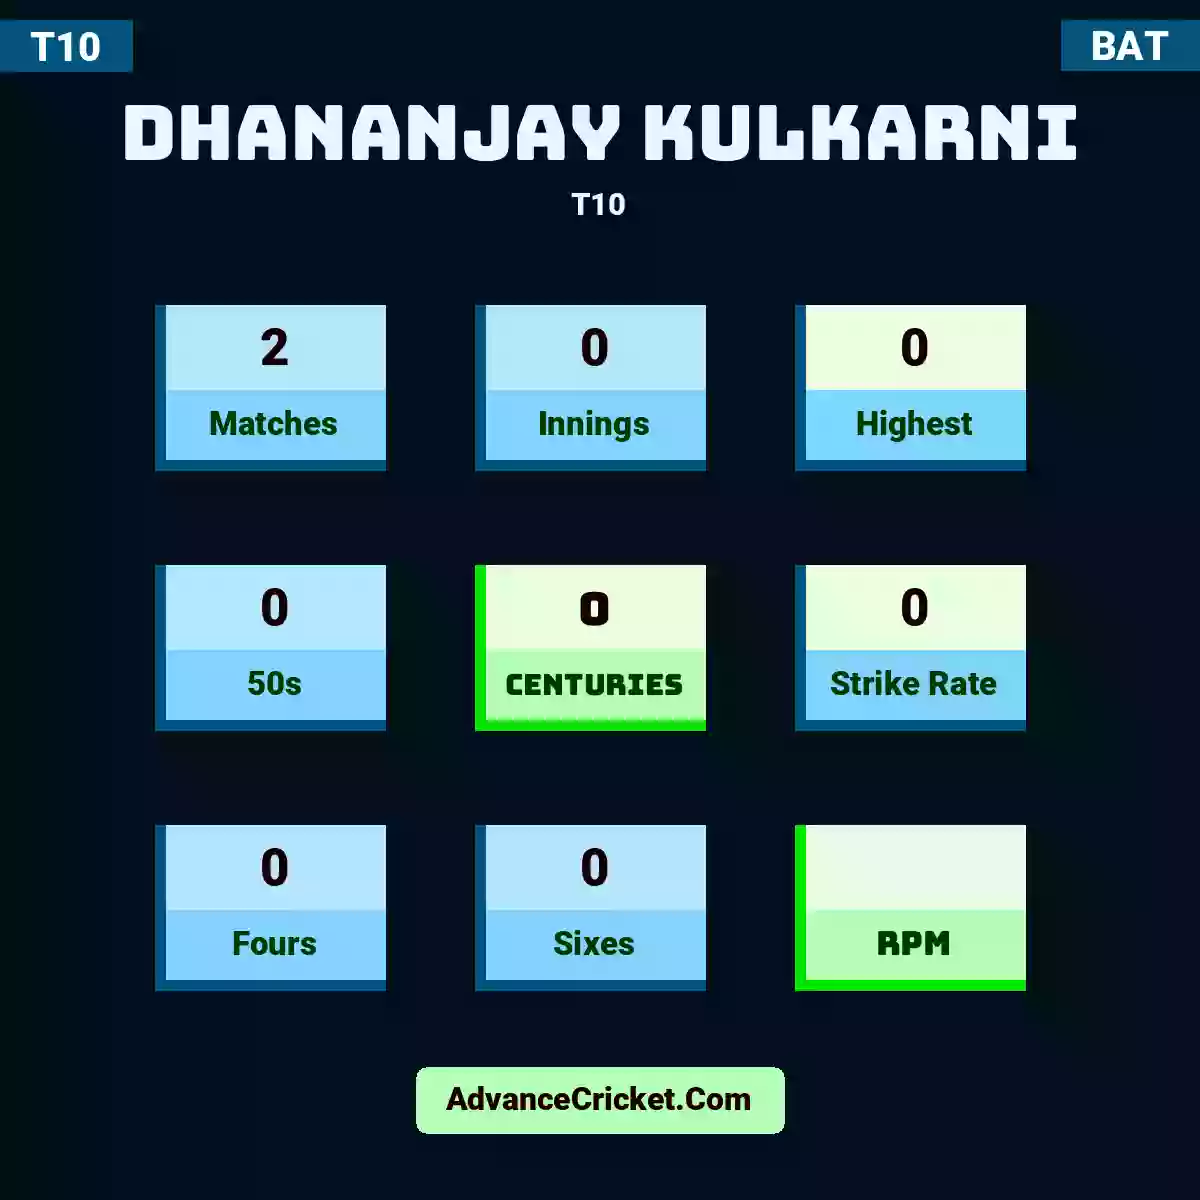 Dhananjay Kulkarni T10 , Dhananjay Kulkarni played 2 matches, scored 0 runs as highest, 0 half-centuries, and 0 centuries, with a strike rate of 0. D.Kulkarni hit 0 fours and 0 sixes.